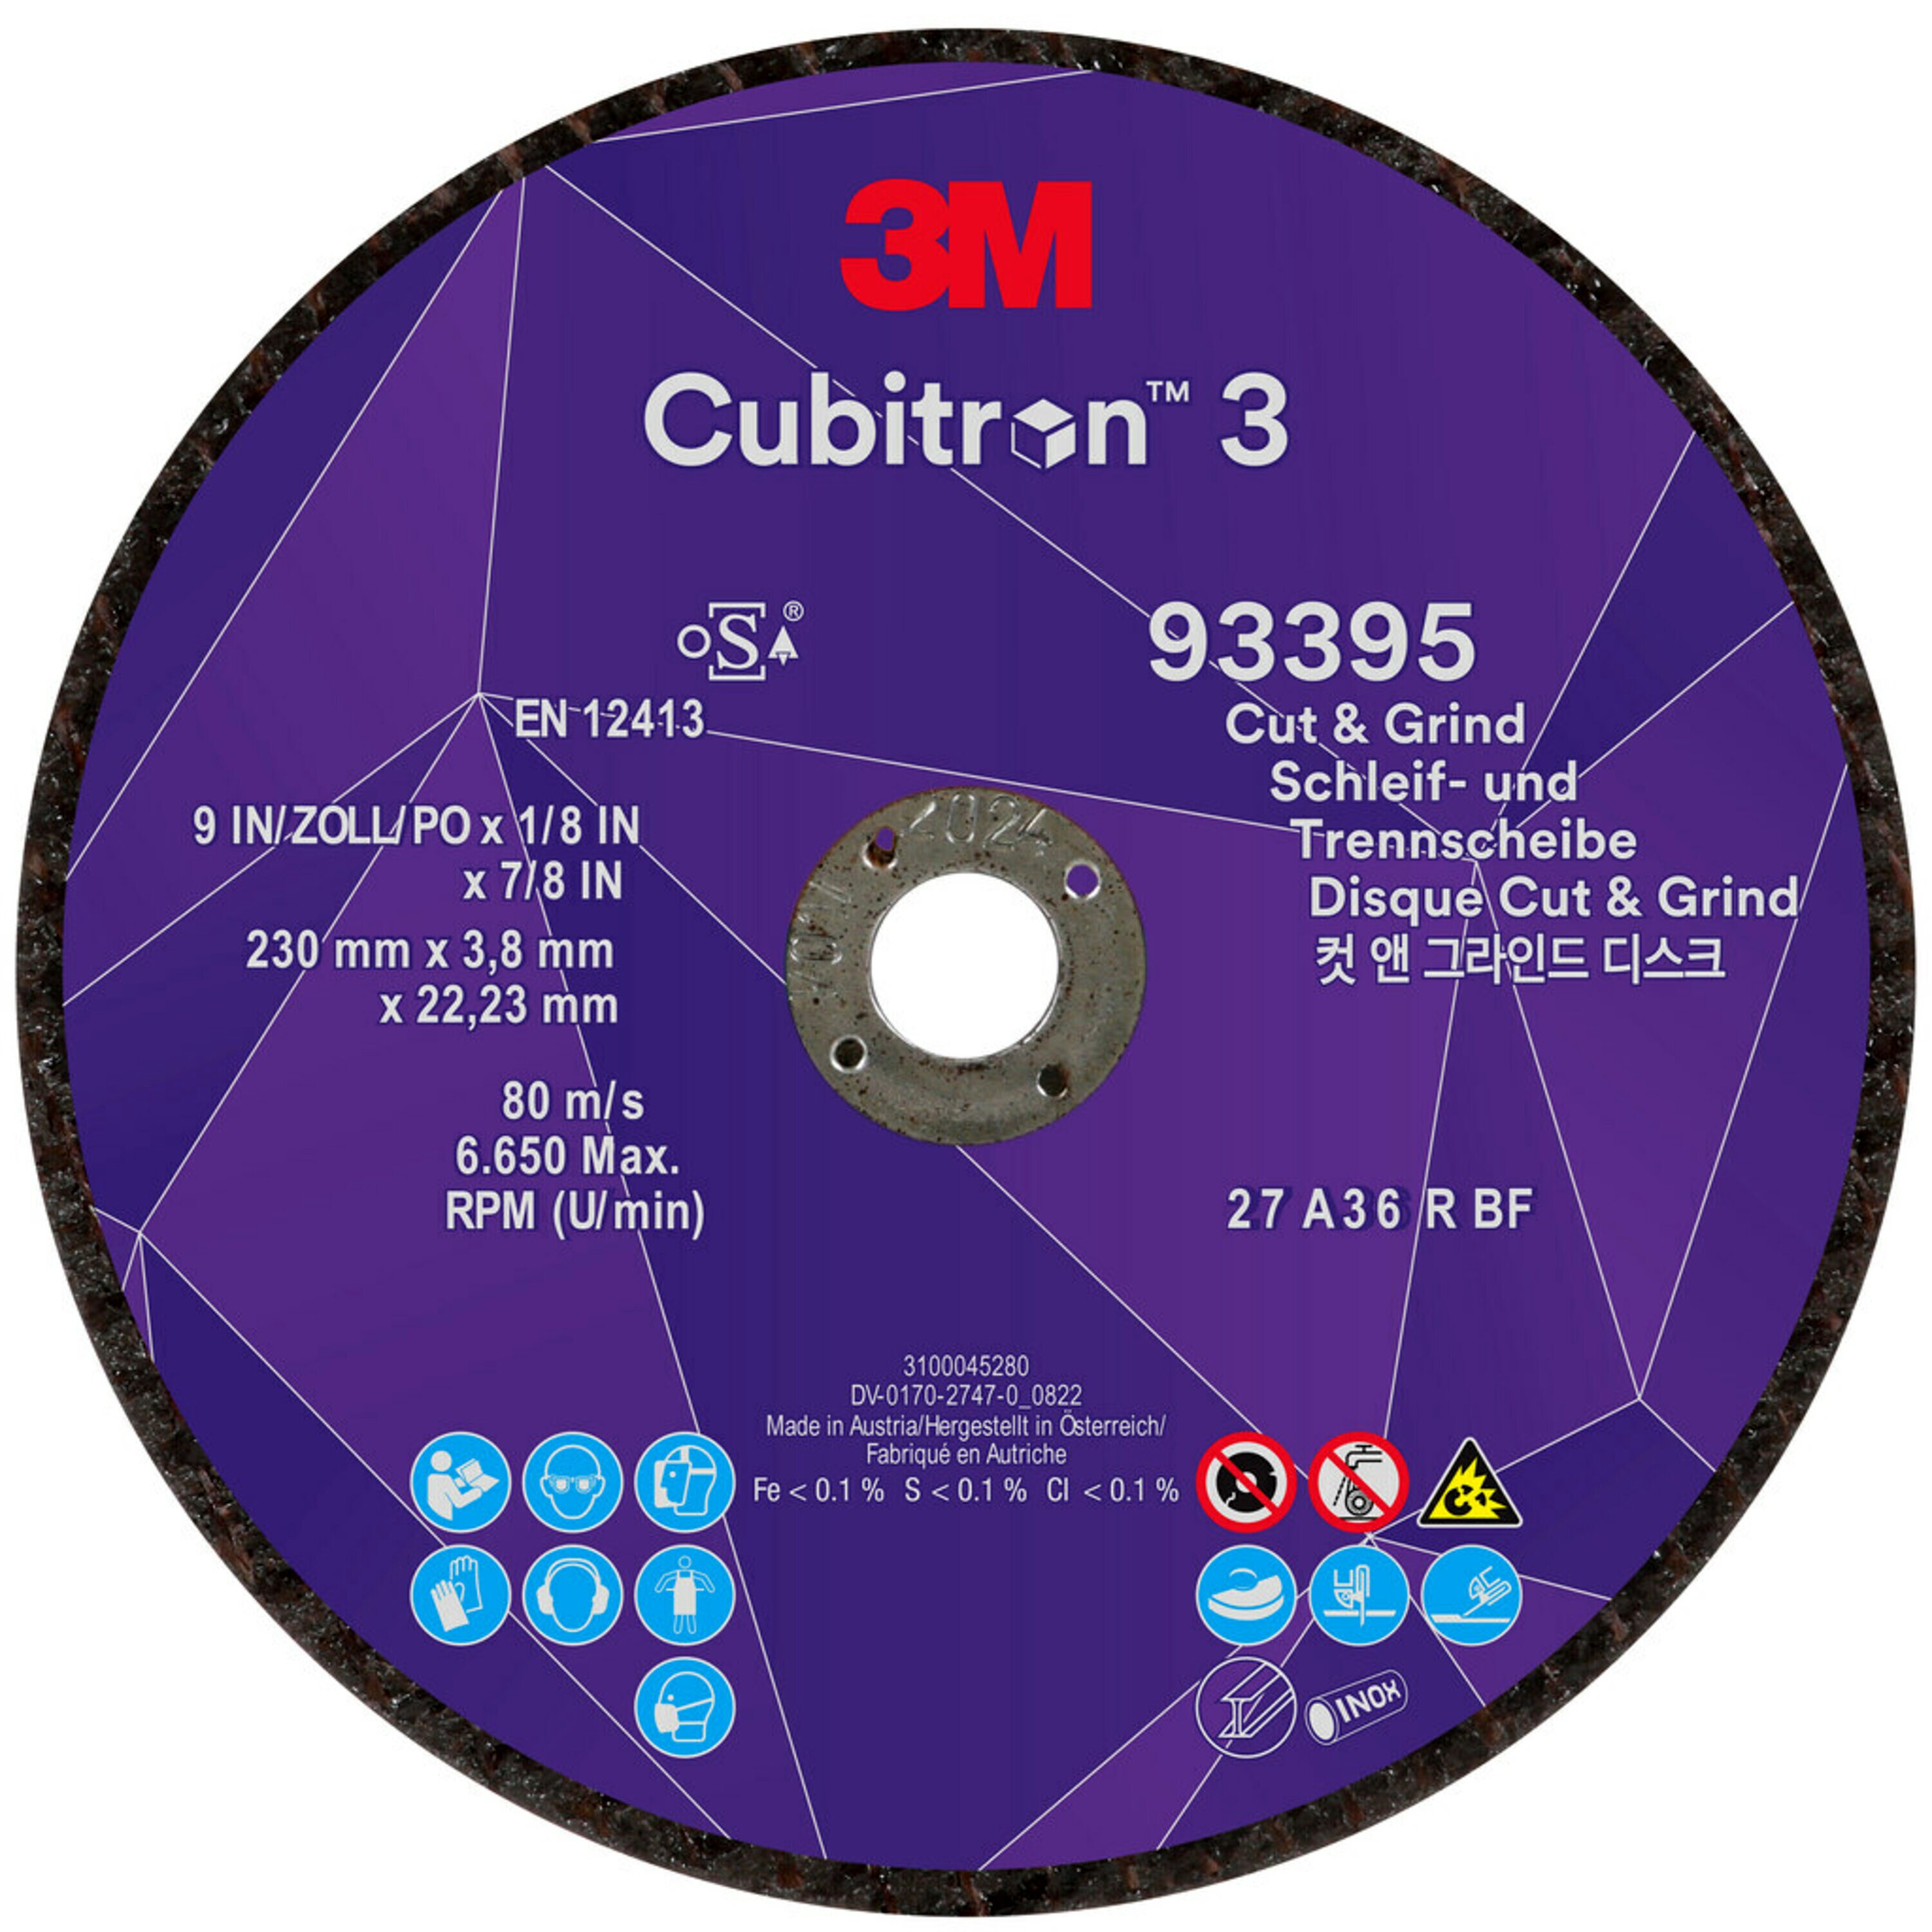 3M Cubitron 3 Cut & Grind Schruppscheibe, 230 mm, 3,8 mm, 22,23 mm, 36+, Typ 27 #93395